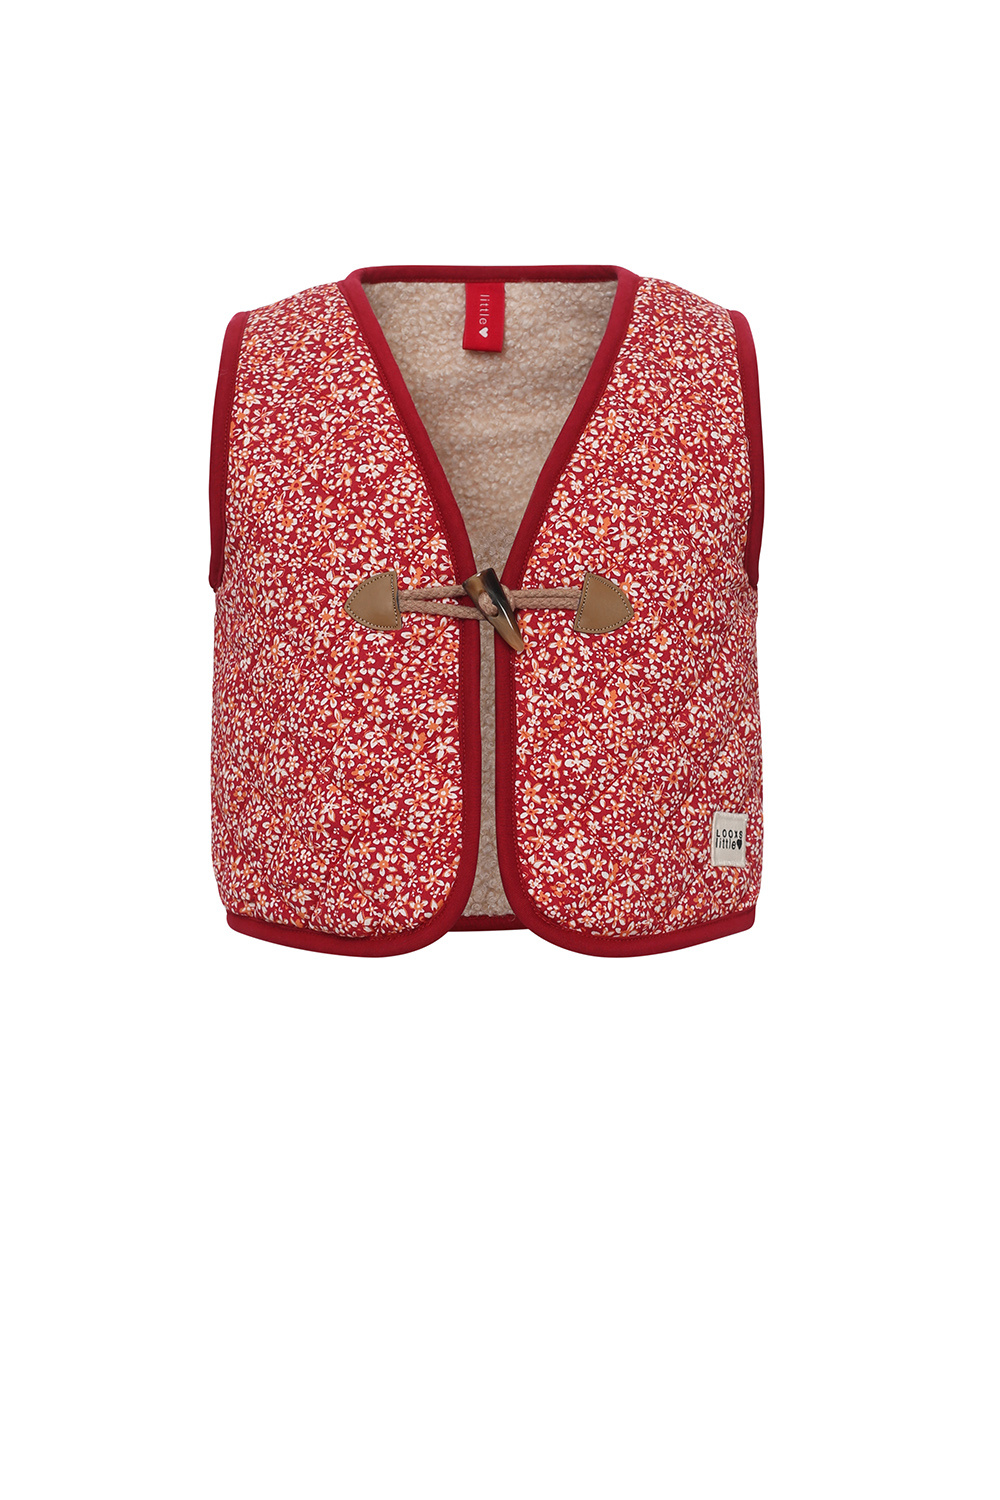 Looxs Revolution 2301-7001-974 Meisjes Sweater/Vest - Maat 104/110 - rood dessin van Polyester